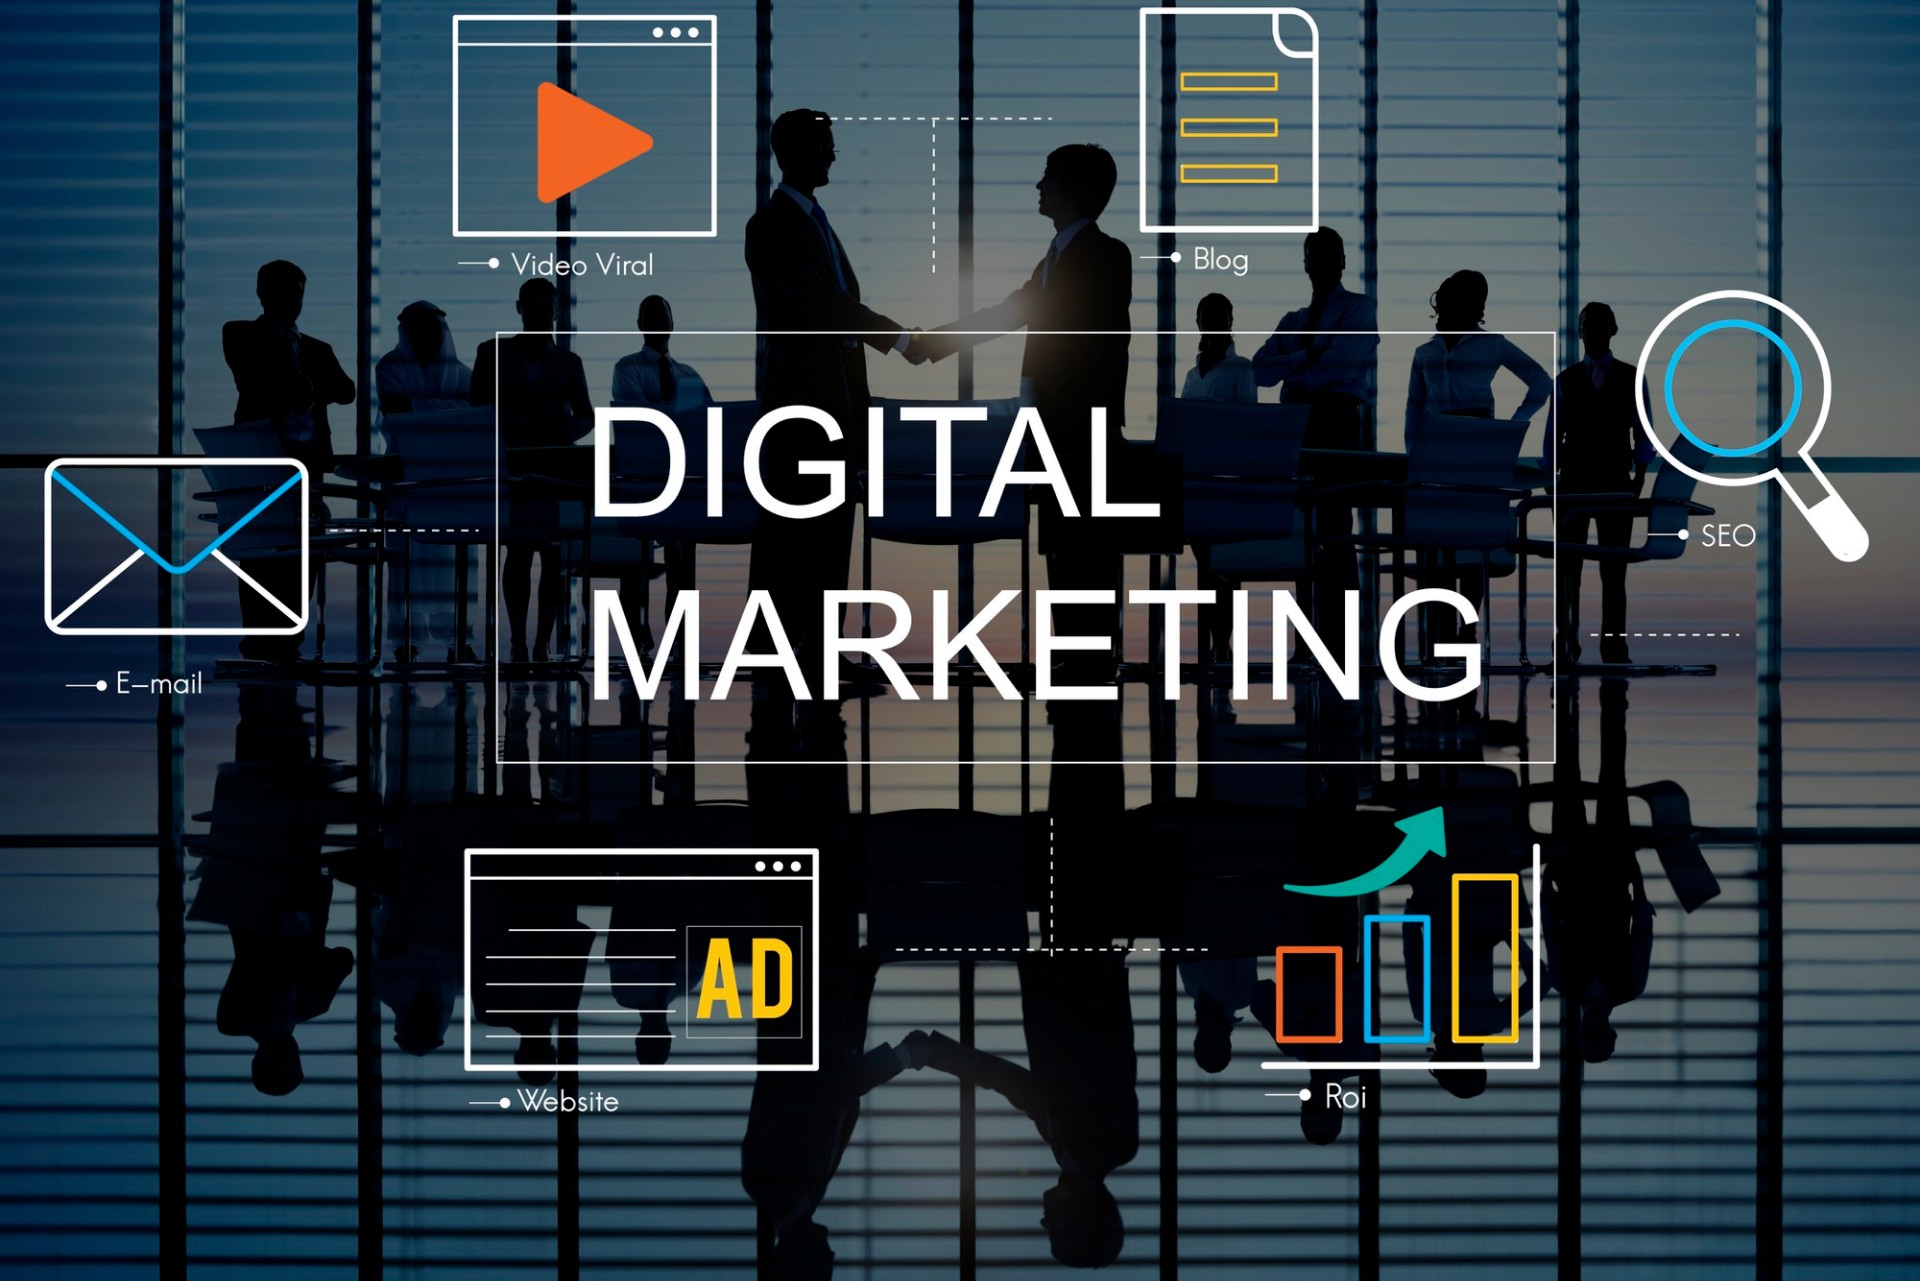 Benefits of a digital marketing strategy